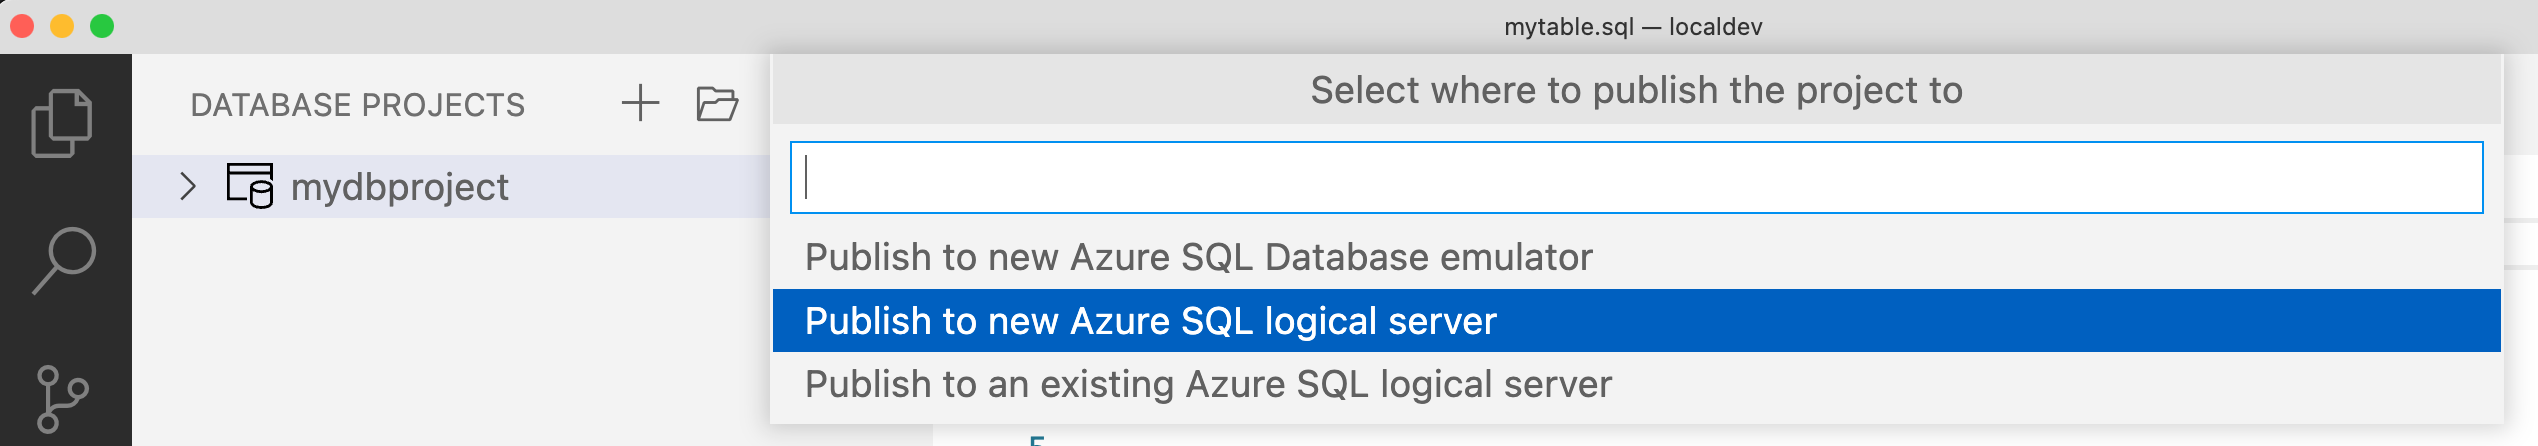 Screenshot of publishing a Database Project to Azure SQL Database.